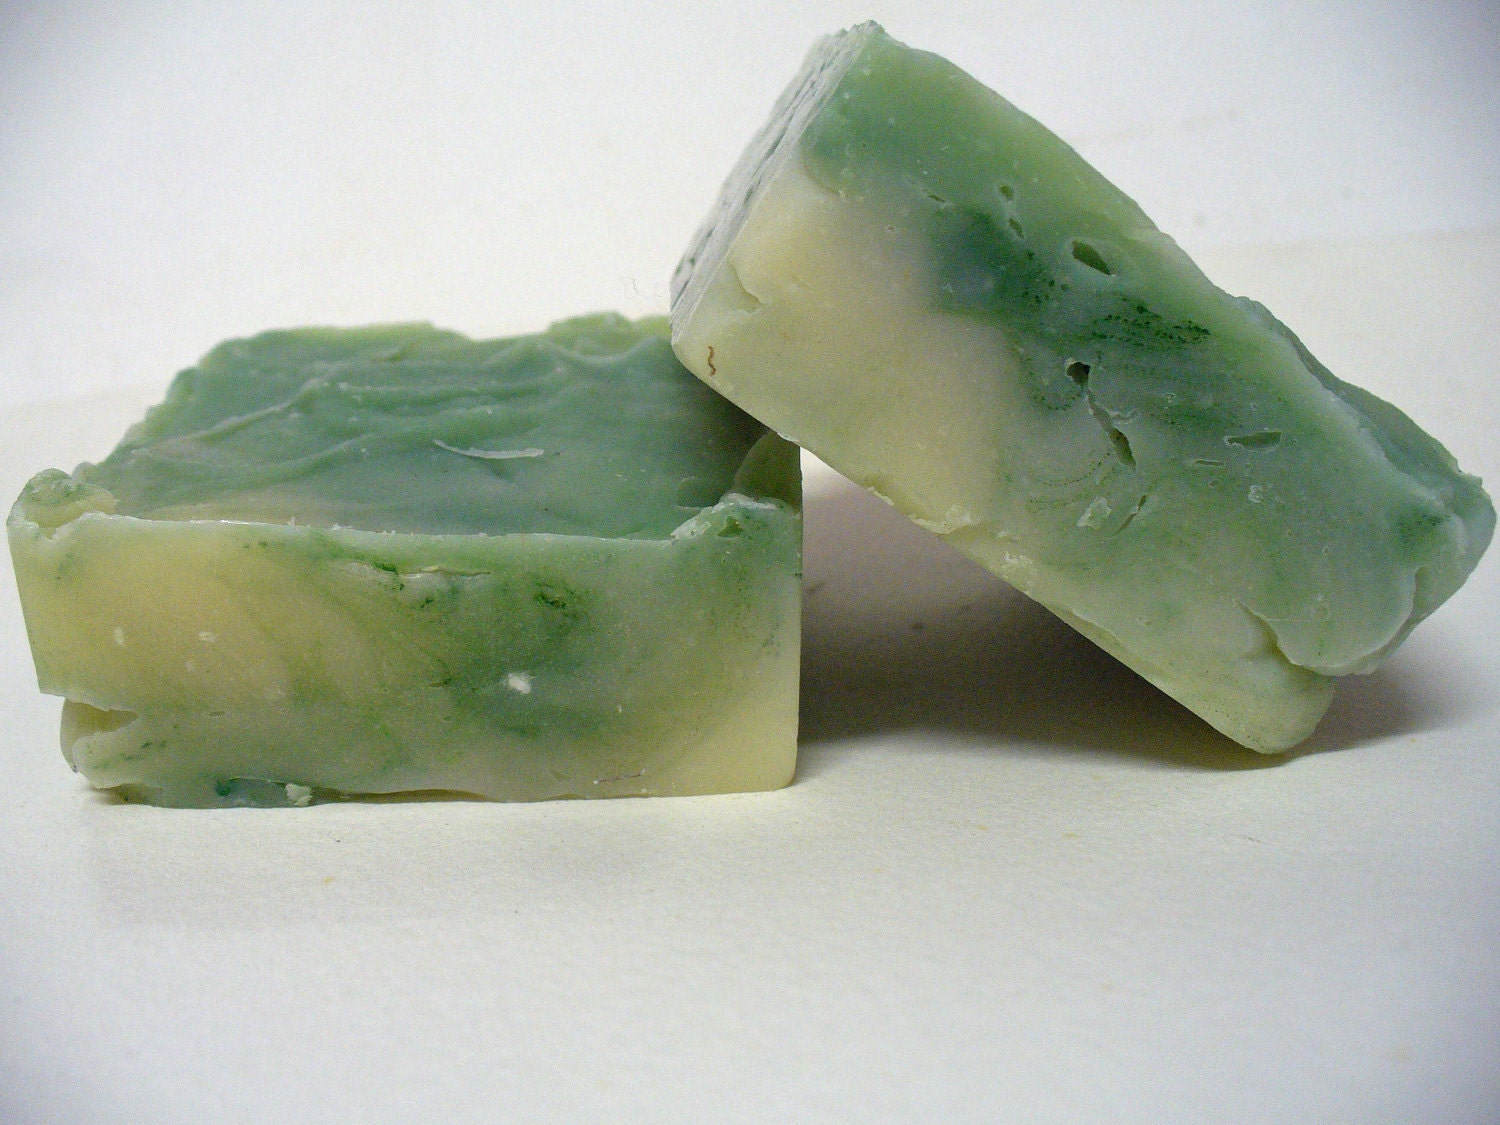 Cold Process Soap - Handmade - Green Soap - JDNatladysCreations